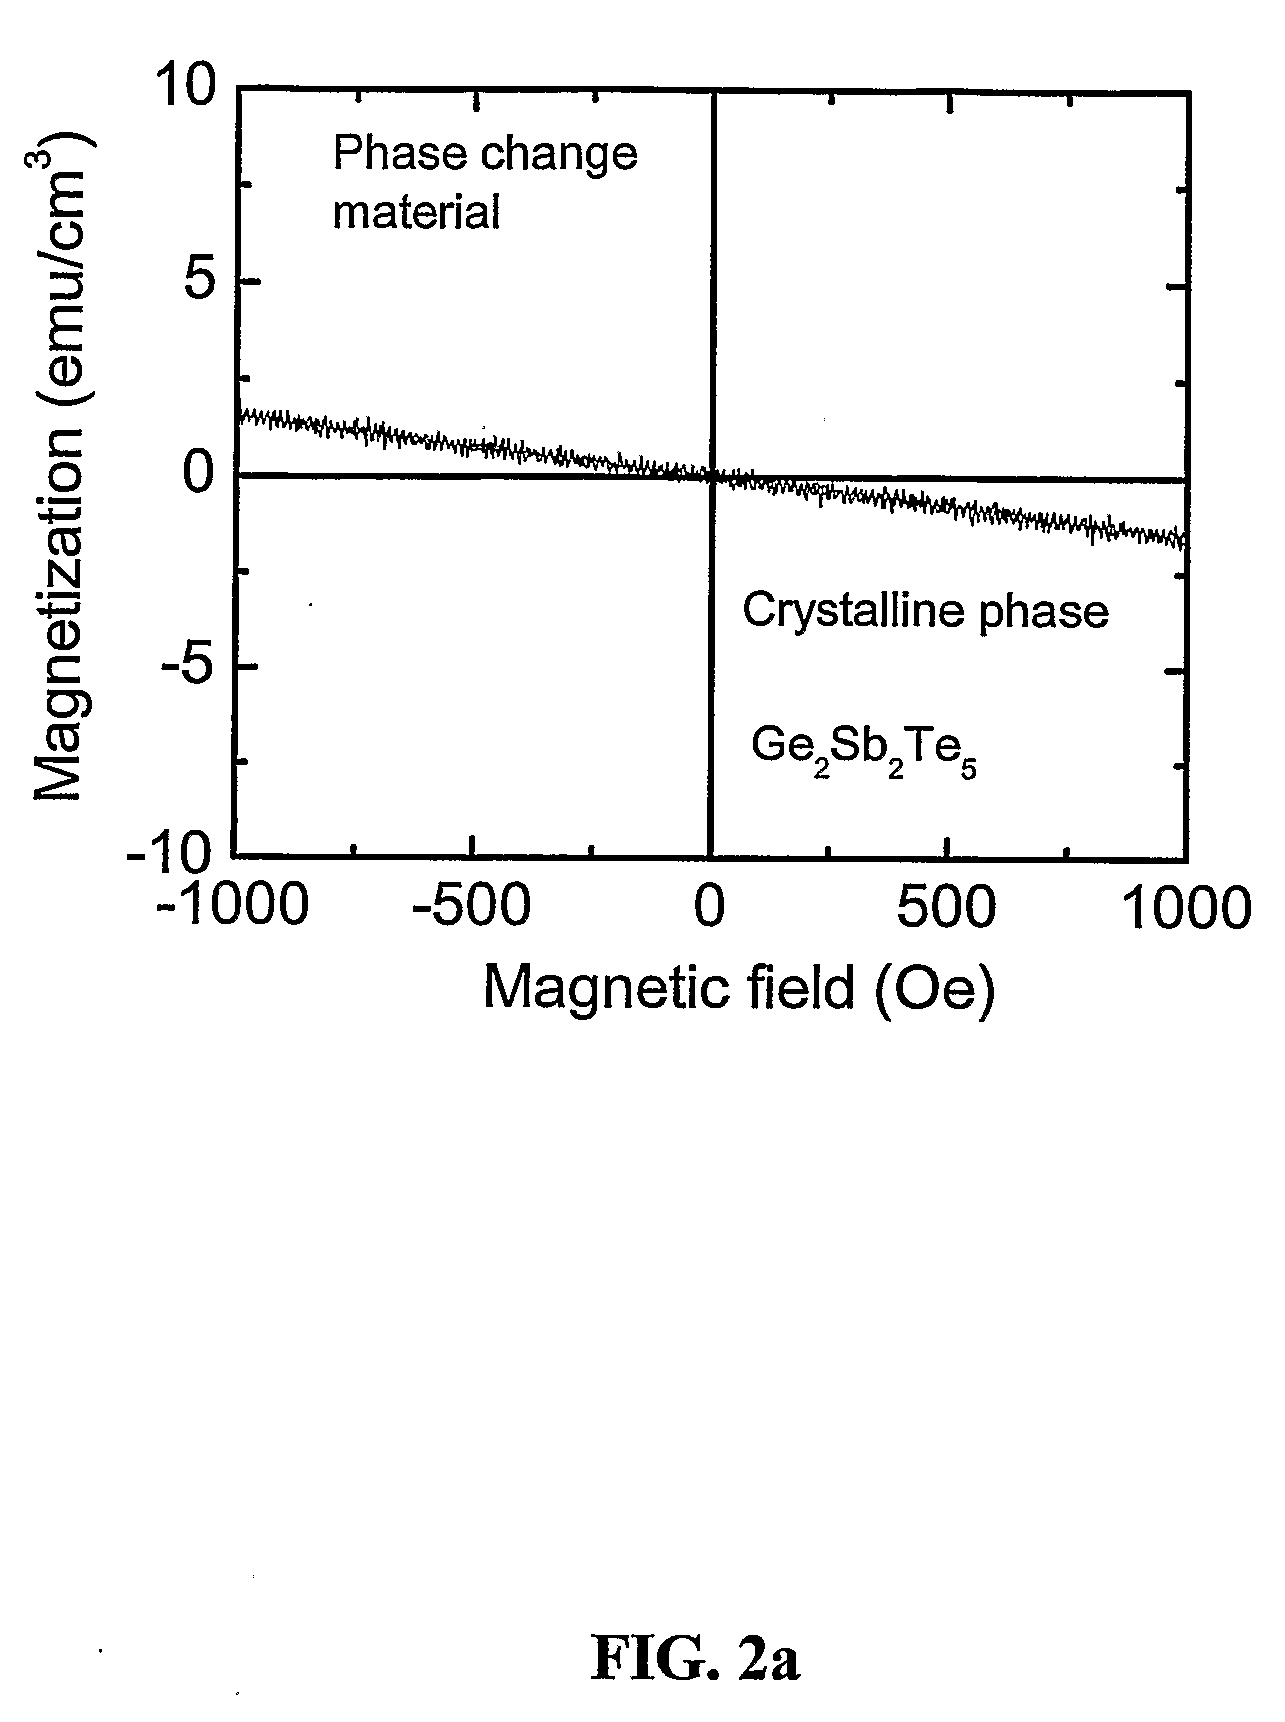 Novel phase change magnetic material